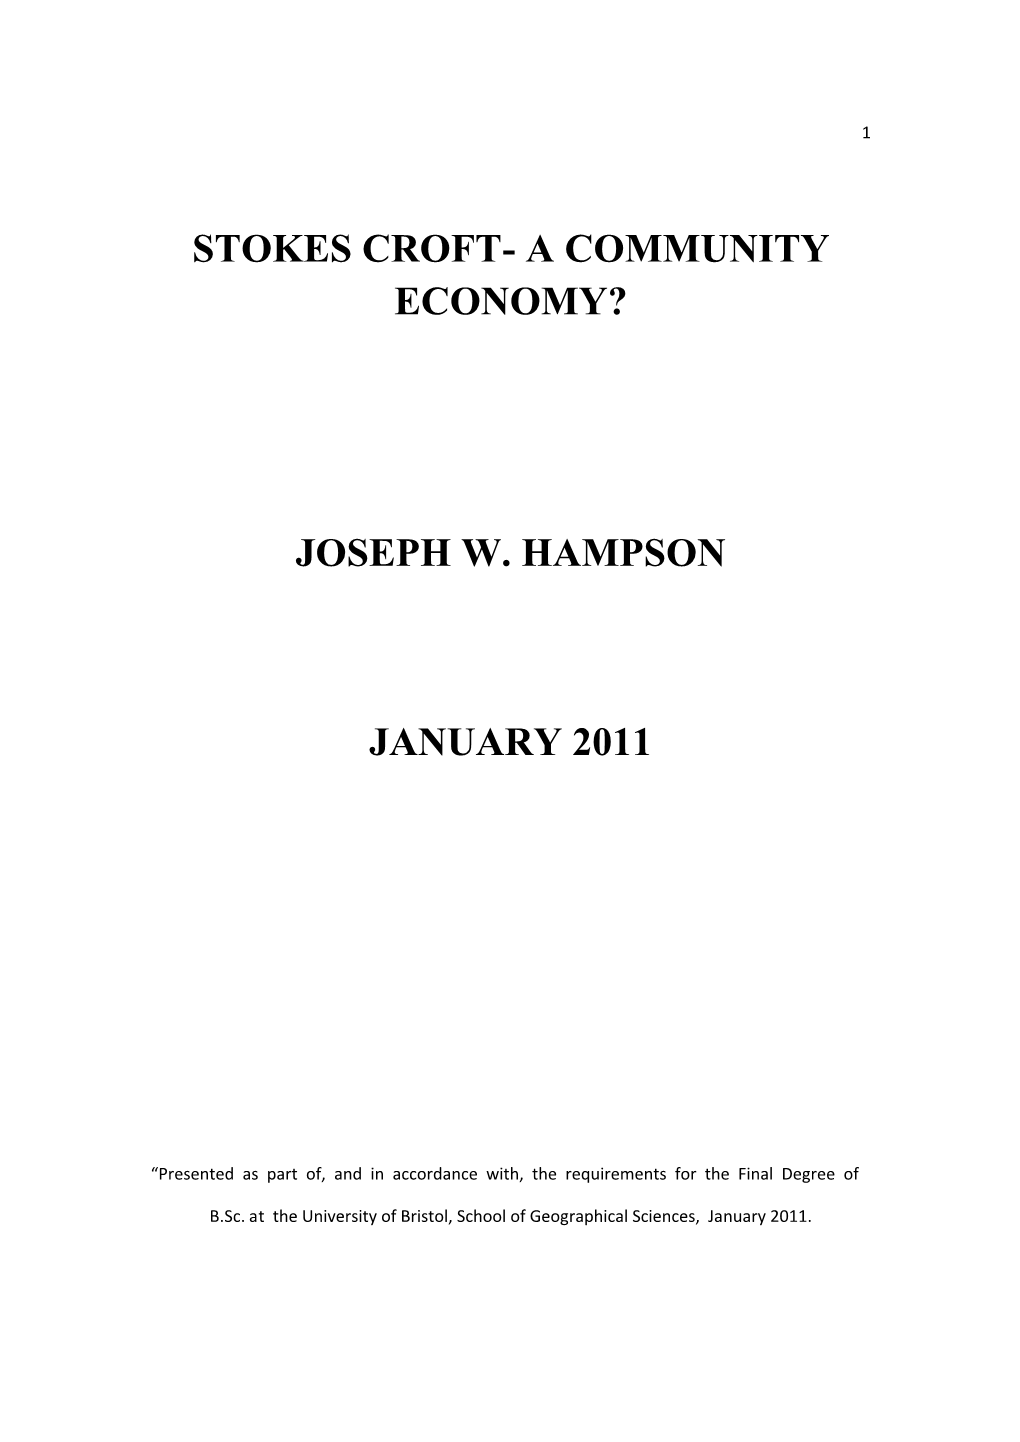 A Community Economy? Joseph W. Hampson January 2011